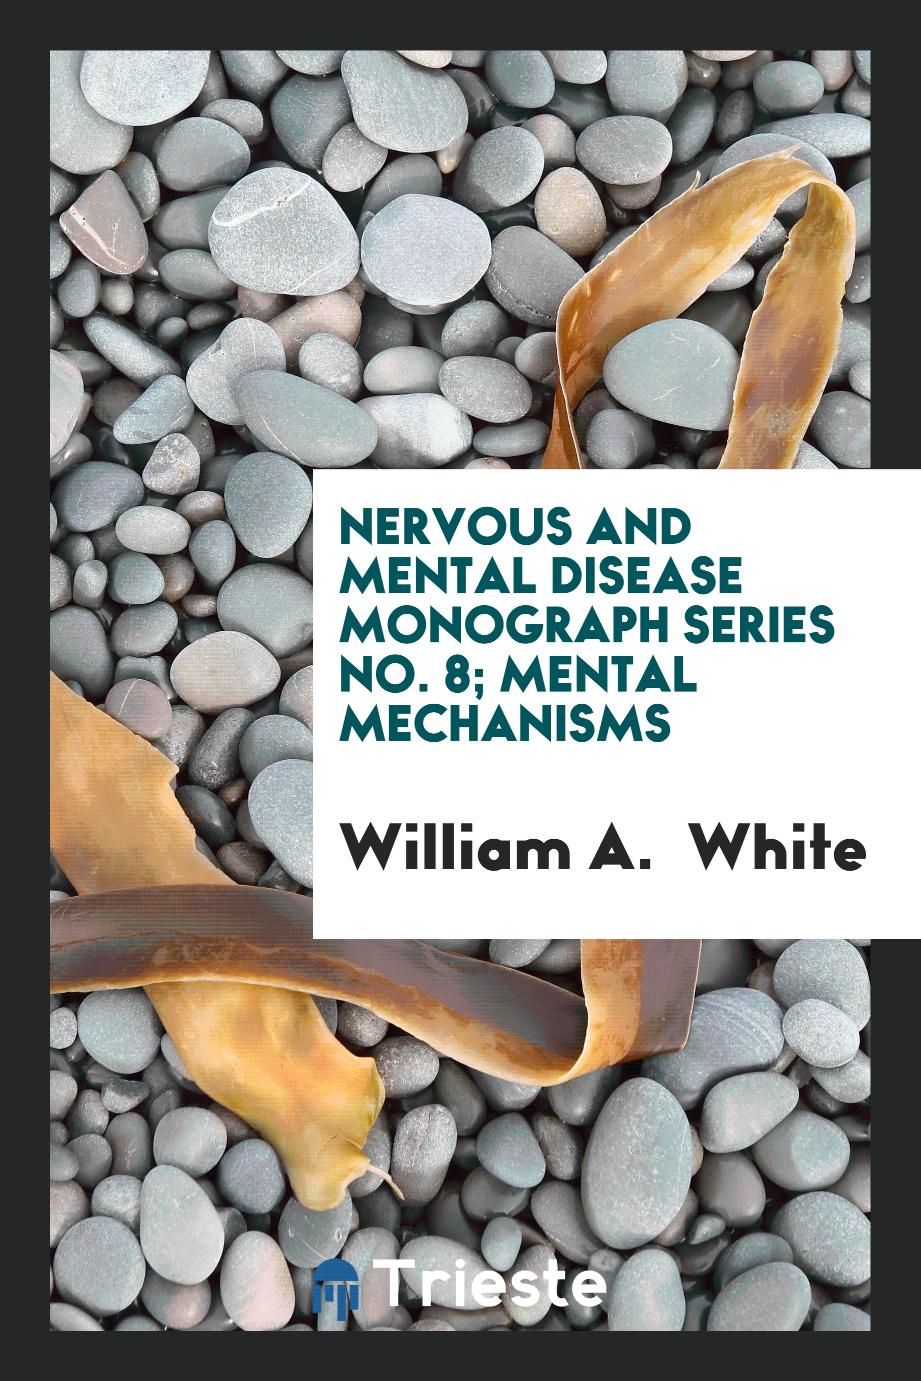 Nervous and Mental Disease Monograph Series No. 8; Mental Mechanisms